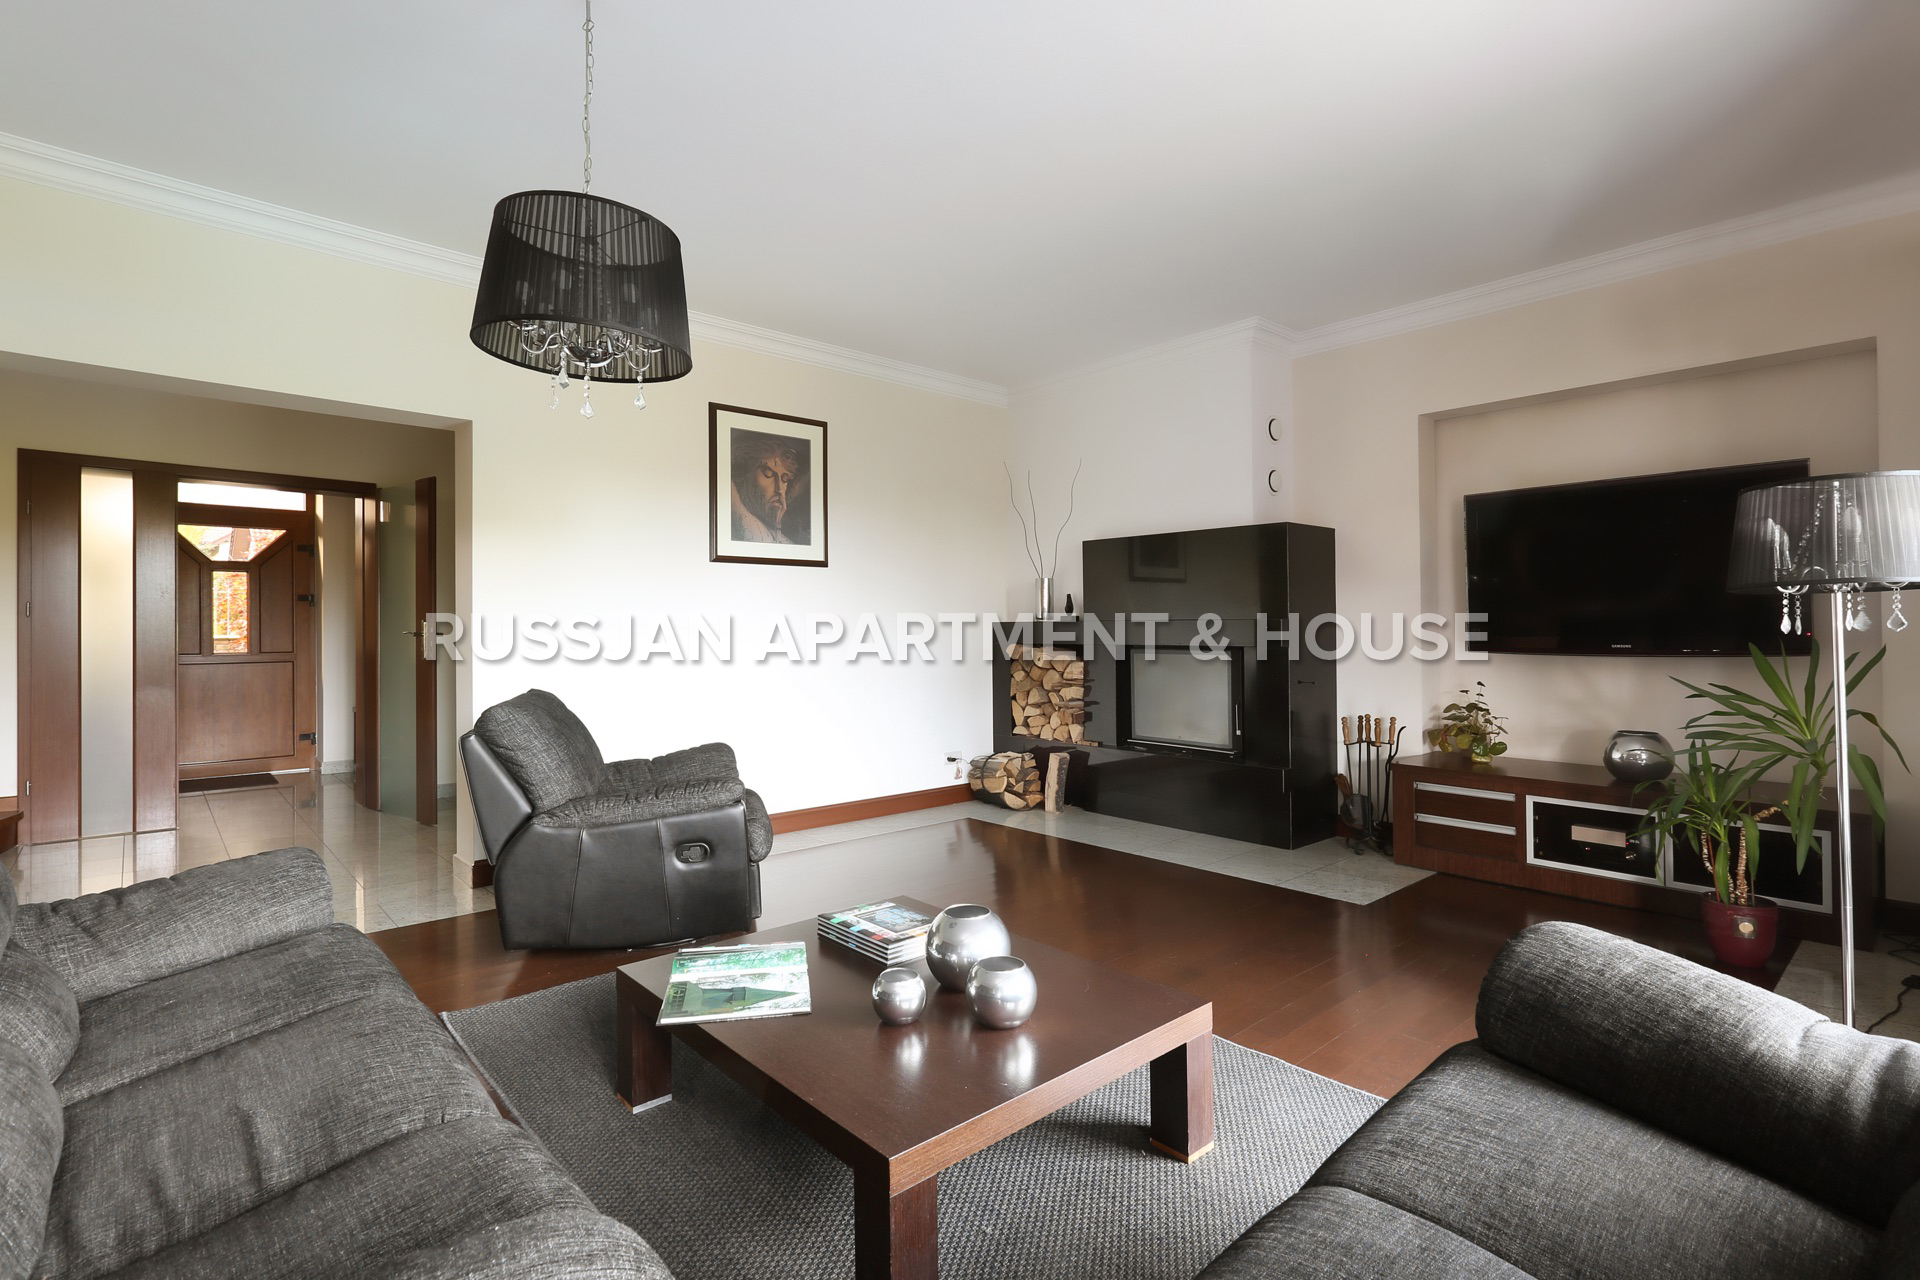 Residence Kiełpino Górne Ulica Lipuska | RUSSJAN Apartment & House